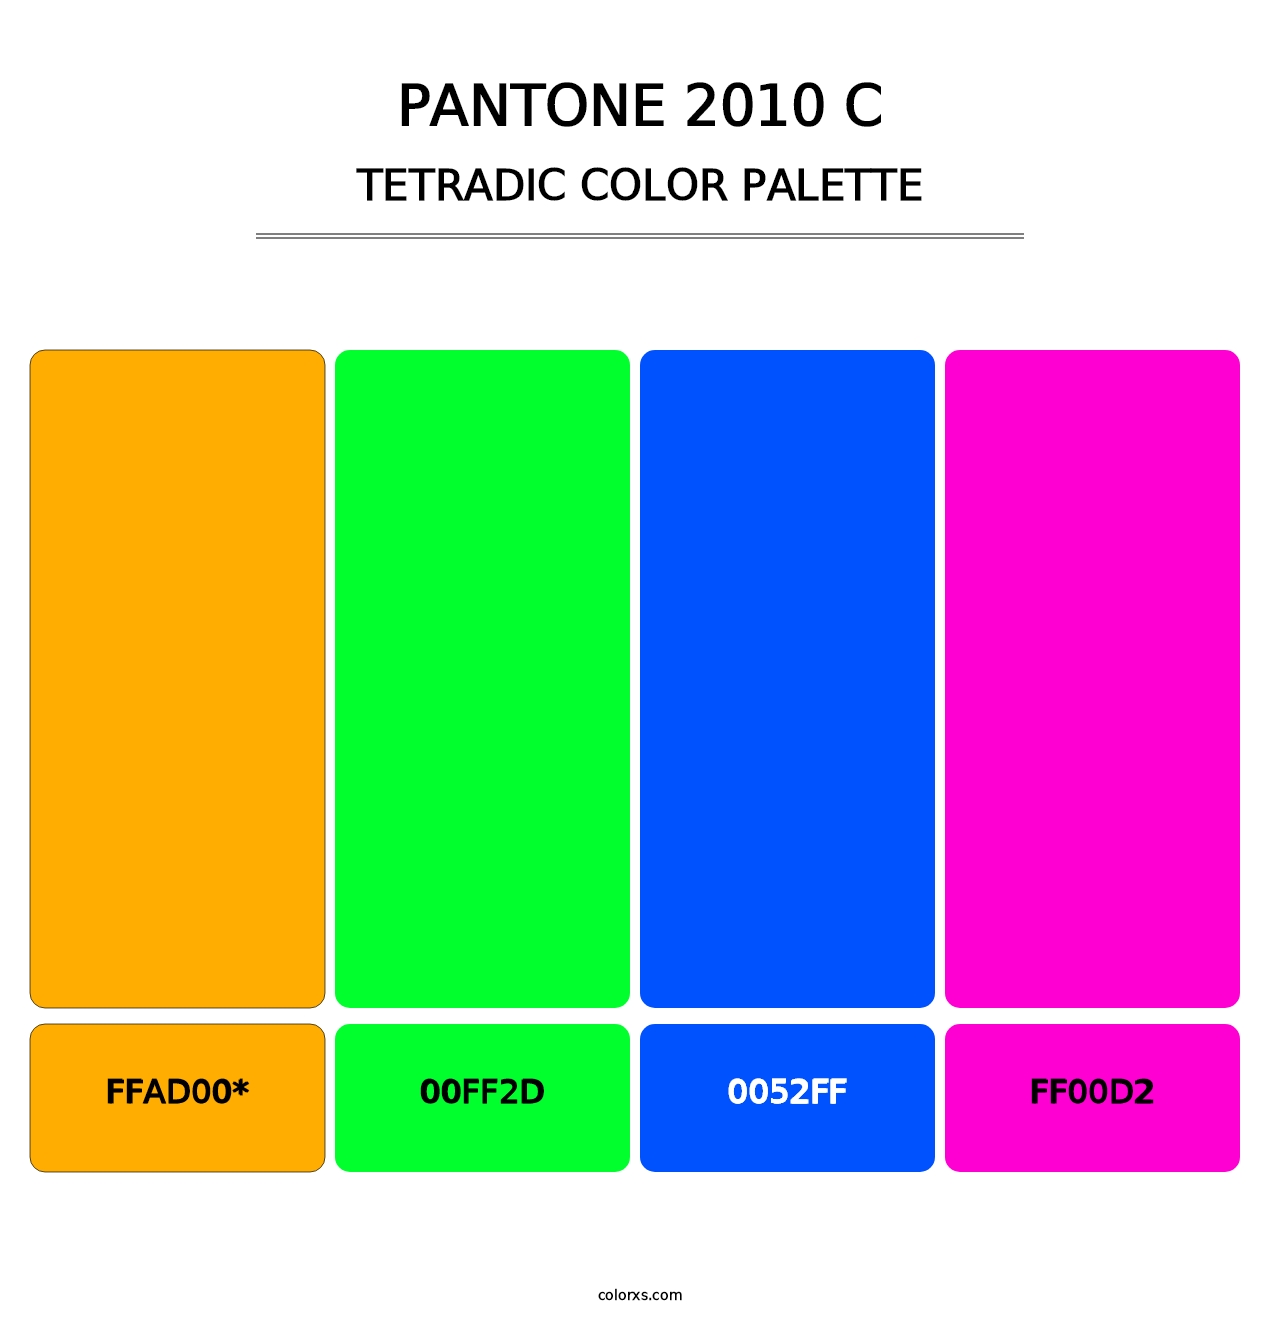 PANTONE 2010 C - Tetradic Color Palette